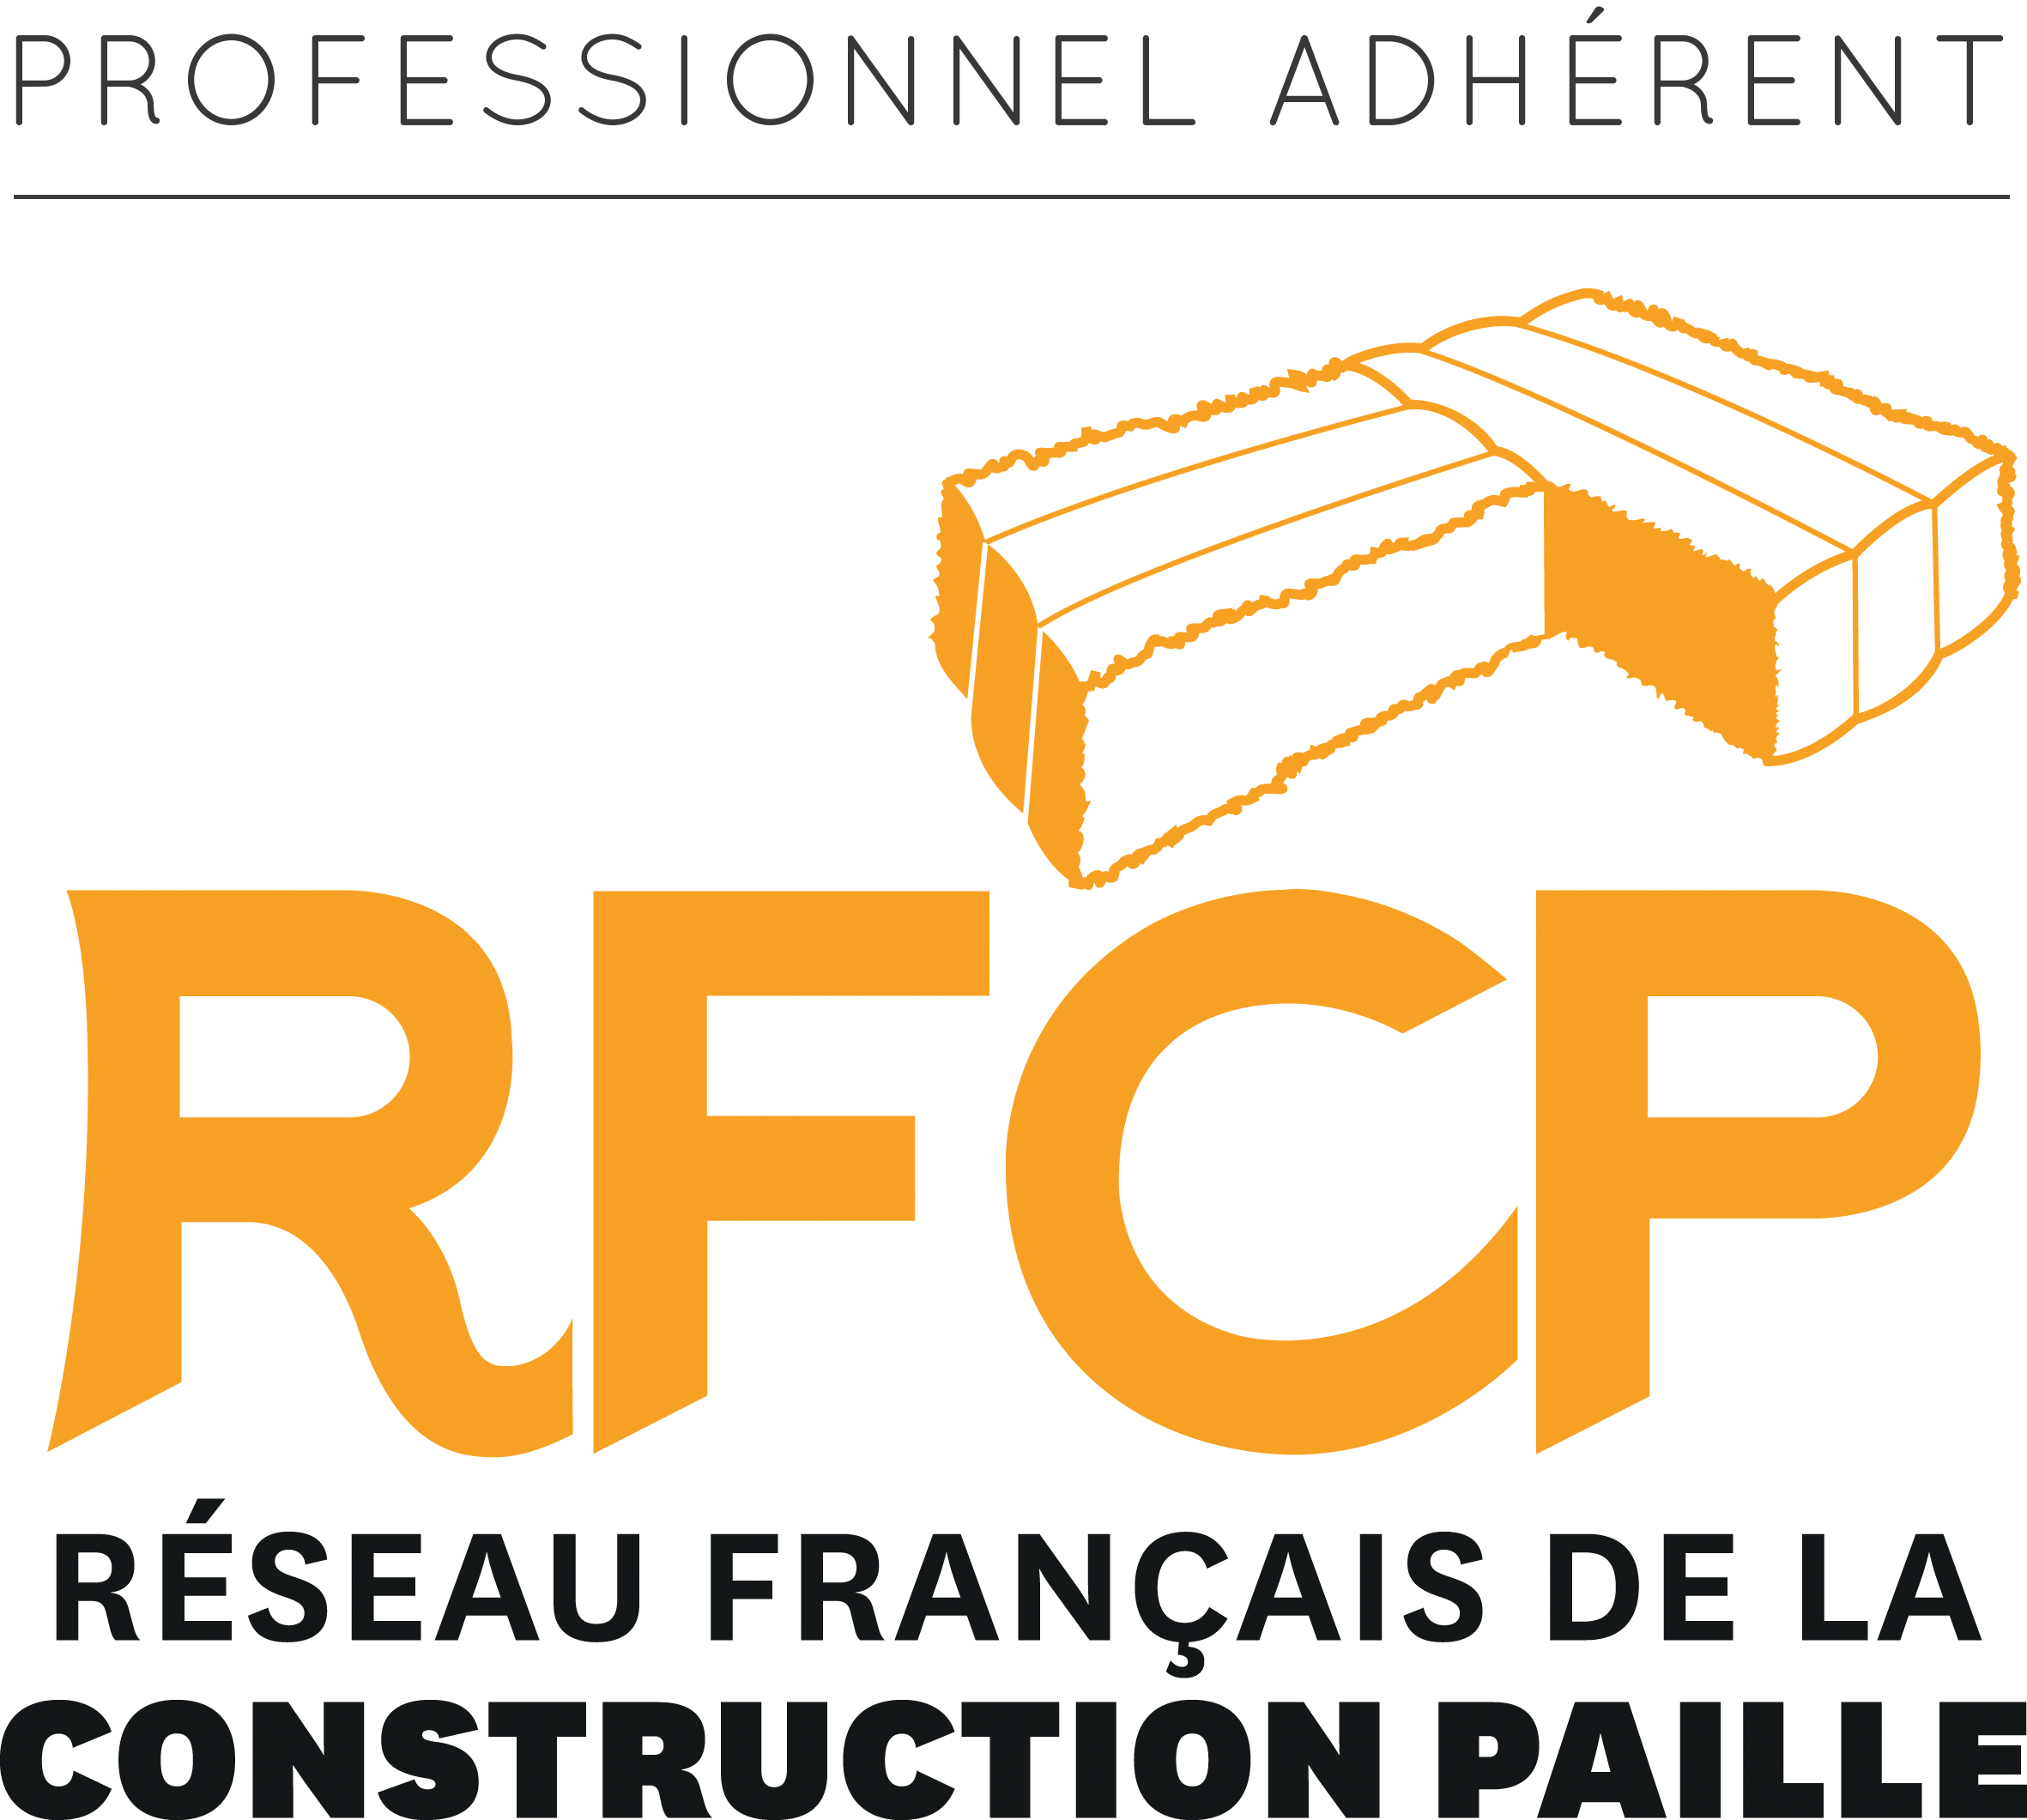 LOGO-RFCP-RVB-professionnel-adherent.png